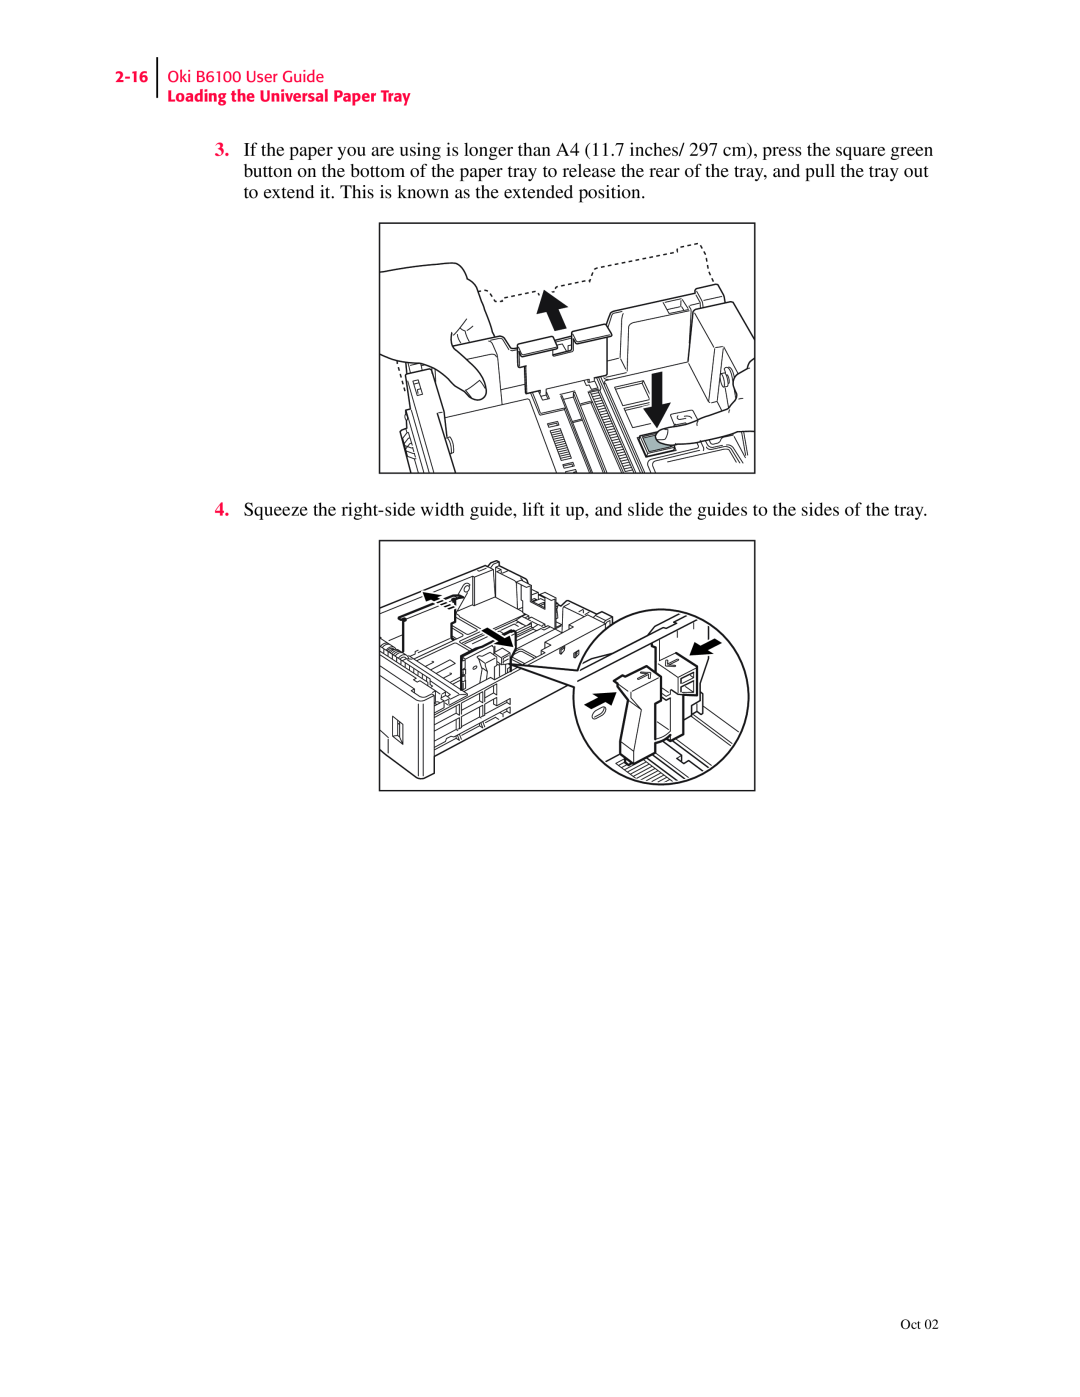 Oki manual Oki B6100 User Guide Loading the Universal Paper Tray 